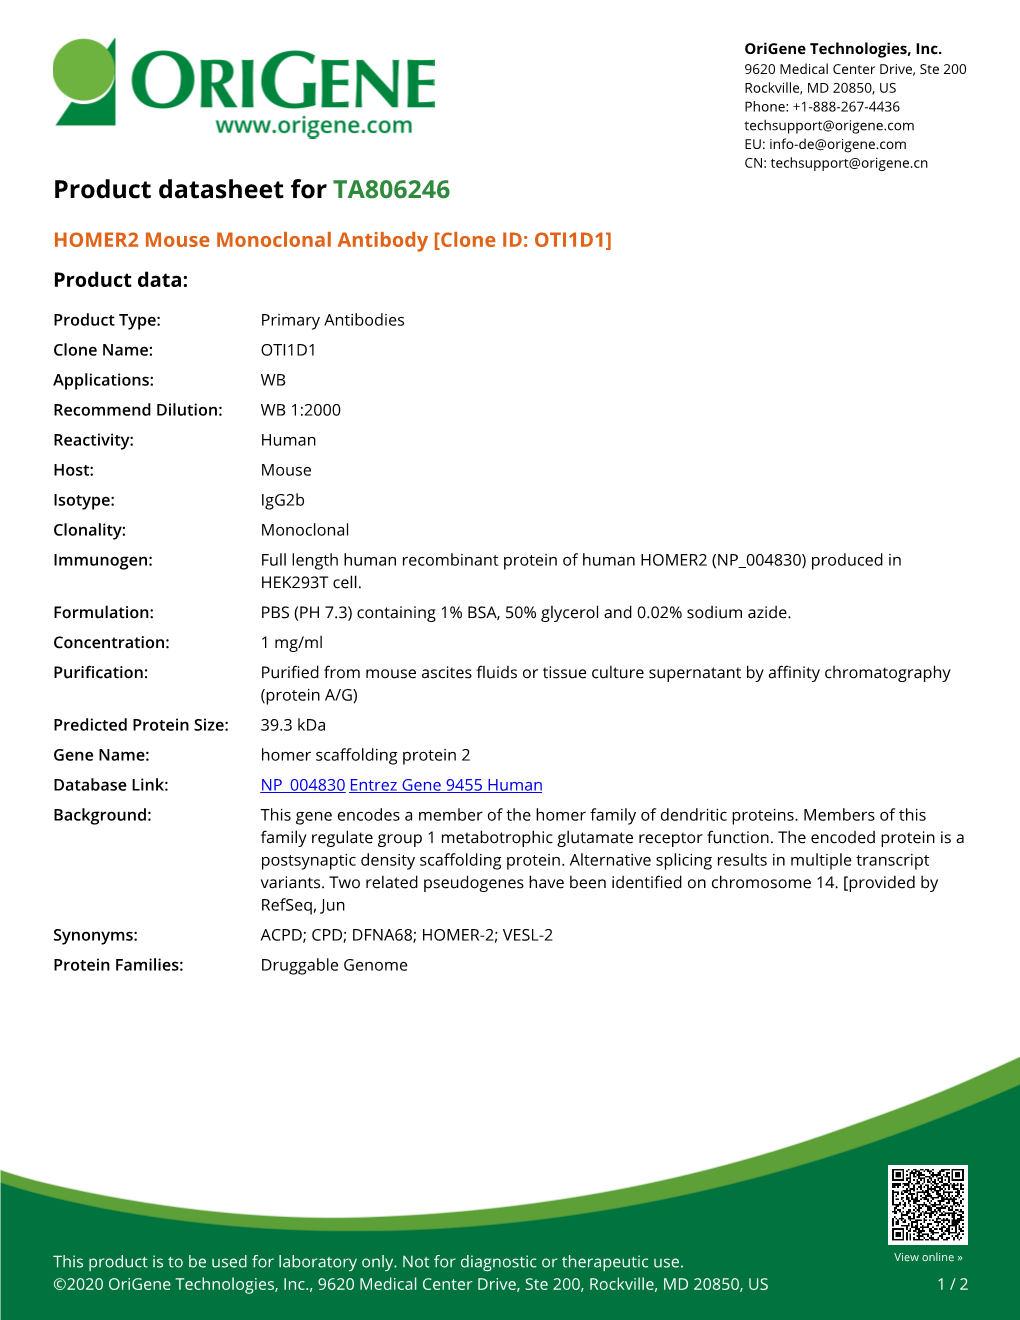 HOMER2 Mouse Monoclonal Antibody [Clone ID: OTI1D1] Product Data